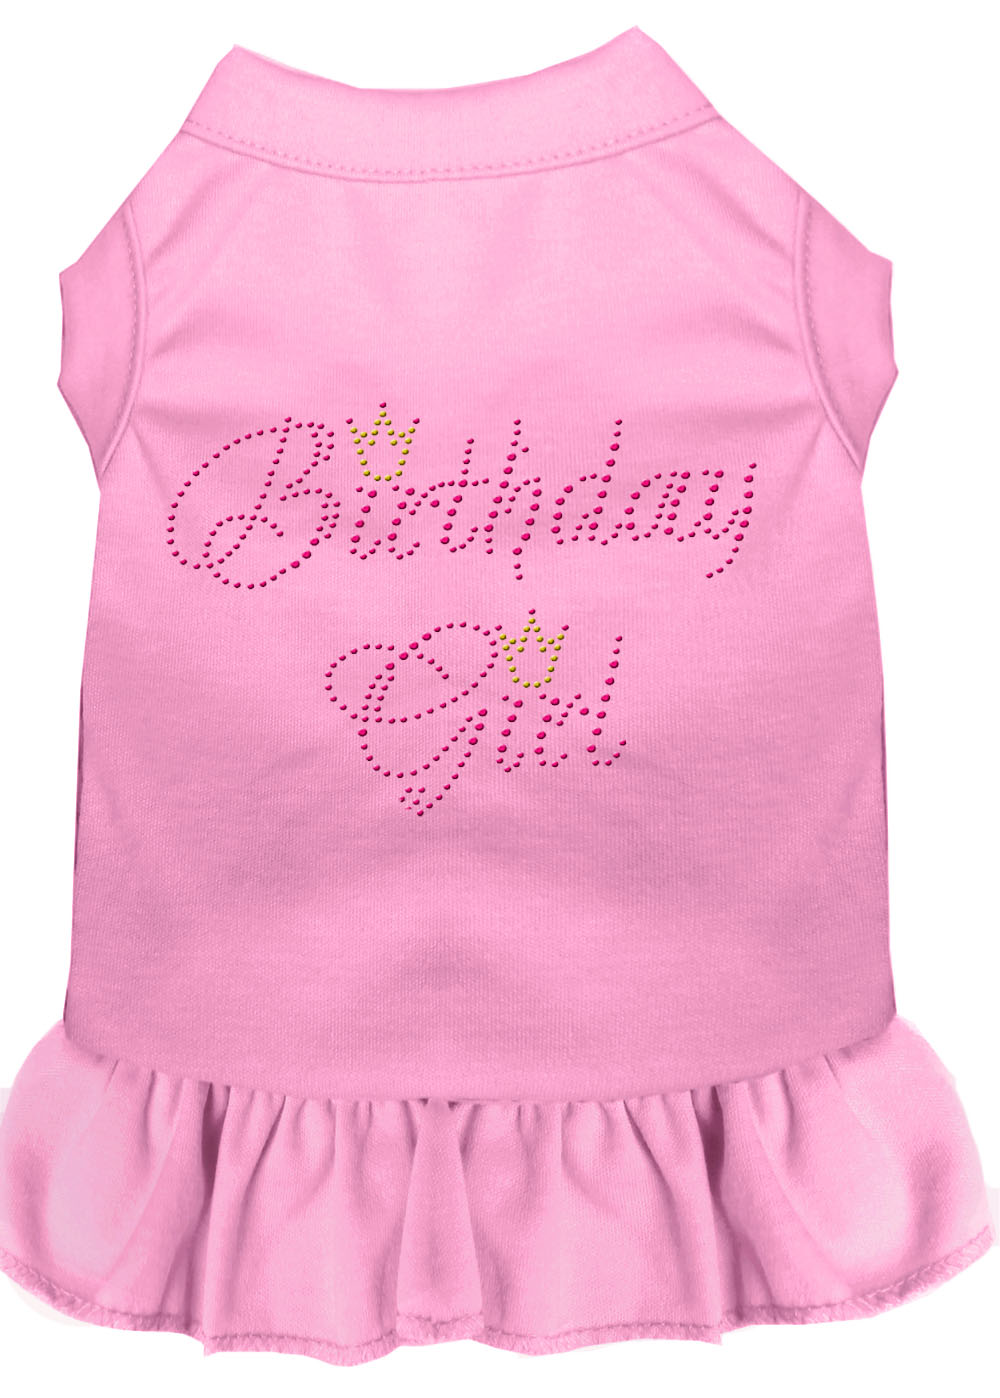 Birthday Girl Rhinestone Dress Light Pink Lg